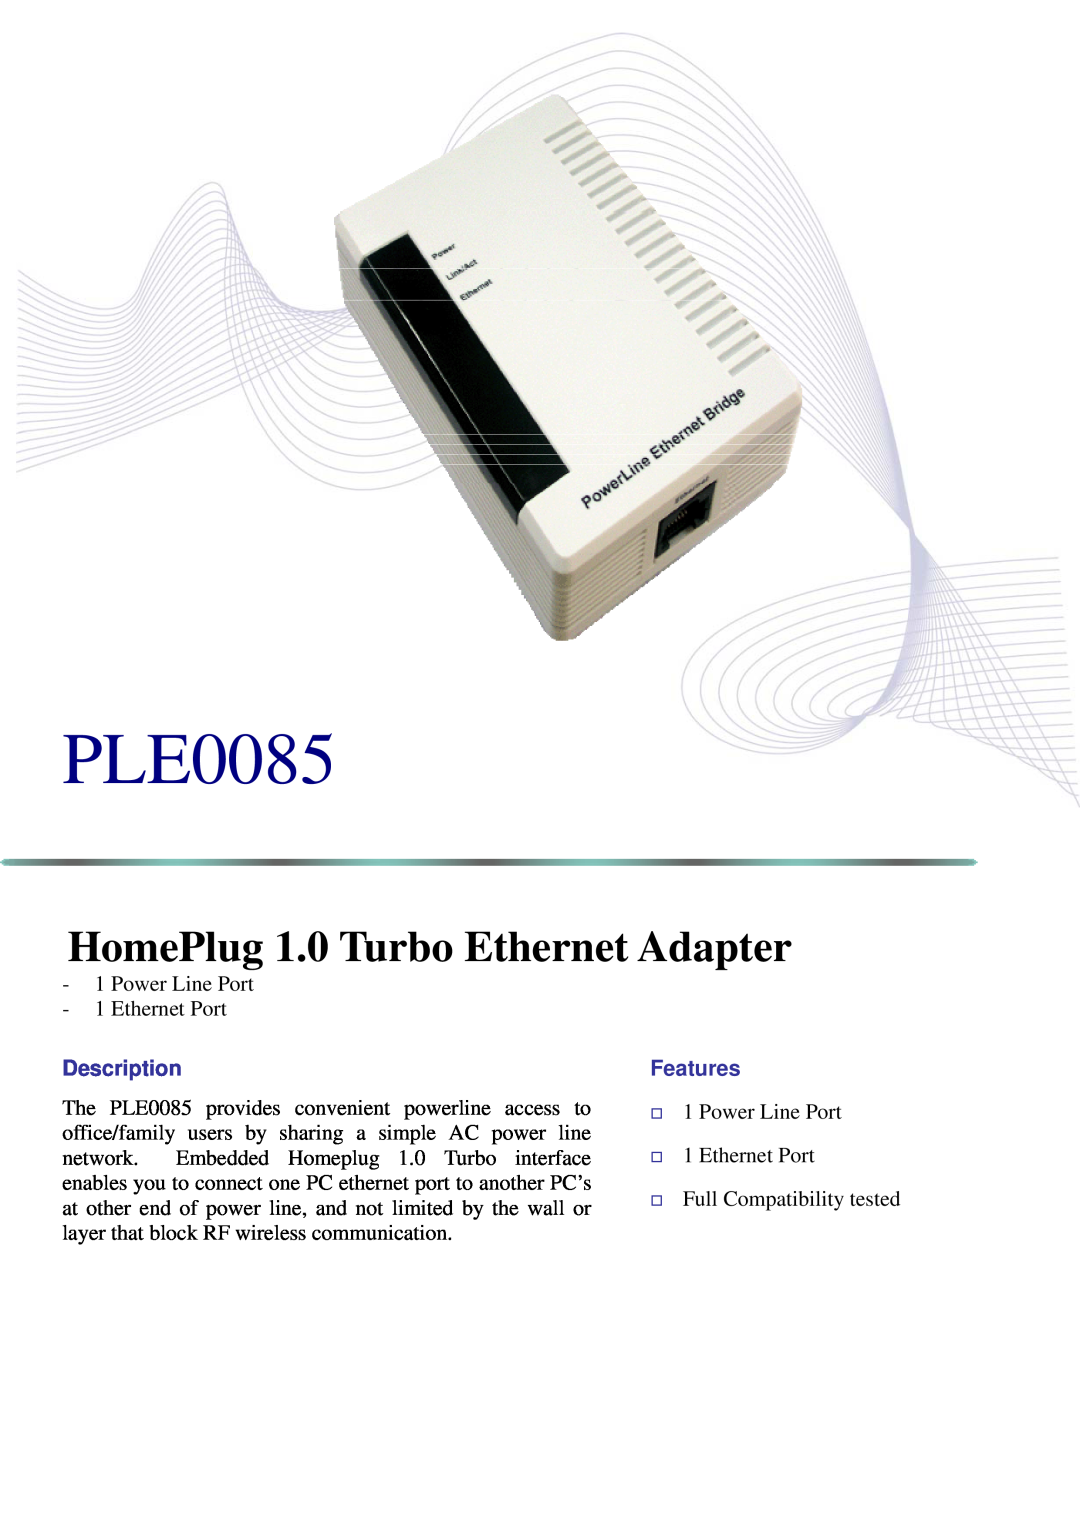 Abocom PLE0085 manual Description, Features, HomePlug 1.0 Turbo Ethernet Adapter 